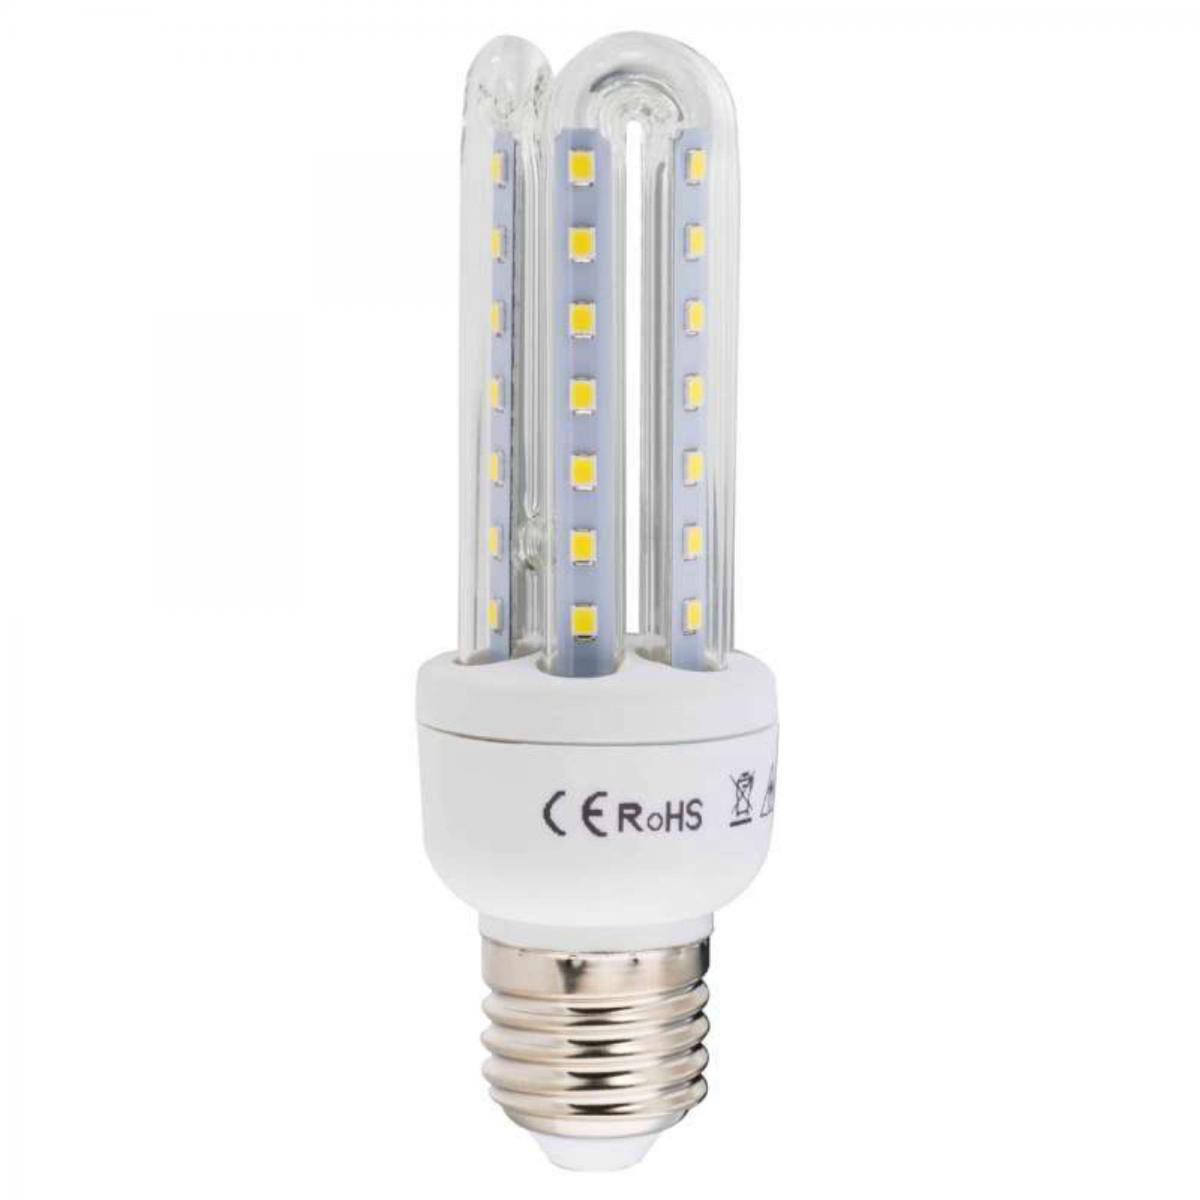 Provence Outillage - Ampoule led 3 tubes E27 14w blanc/froid - Ampoules LED